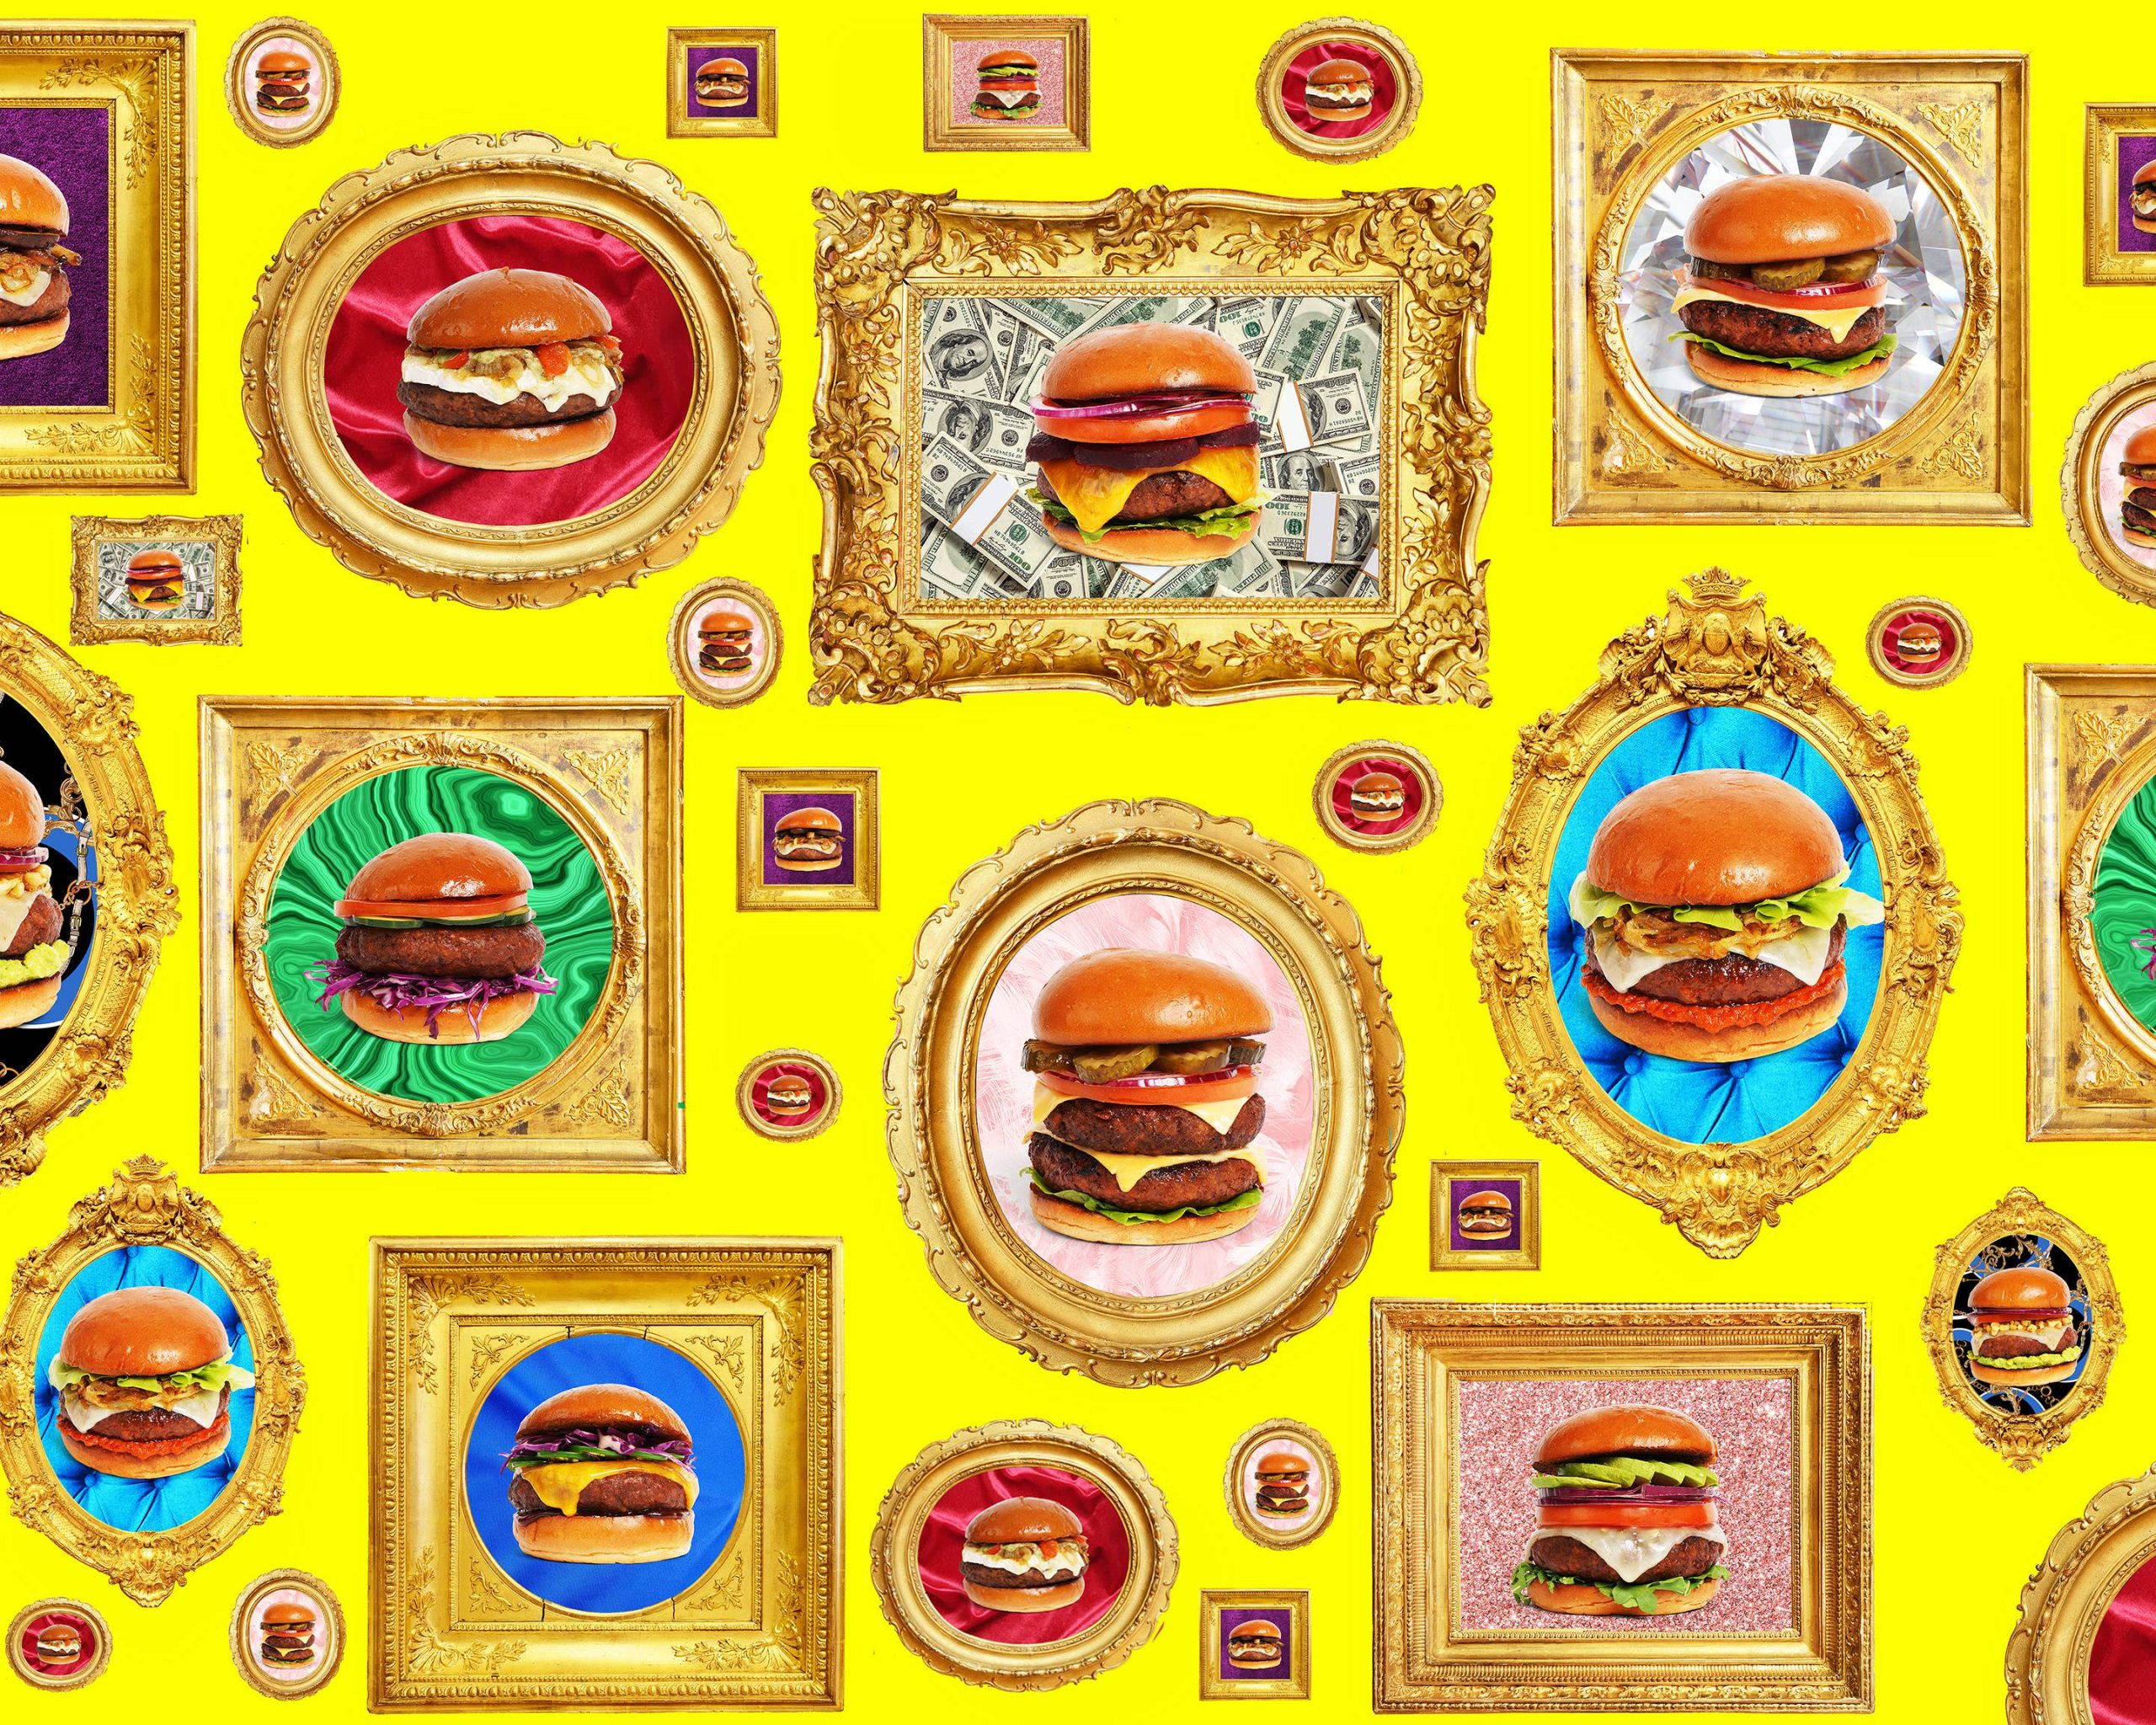 Burger Mansion